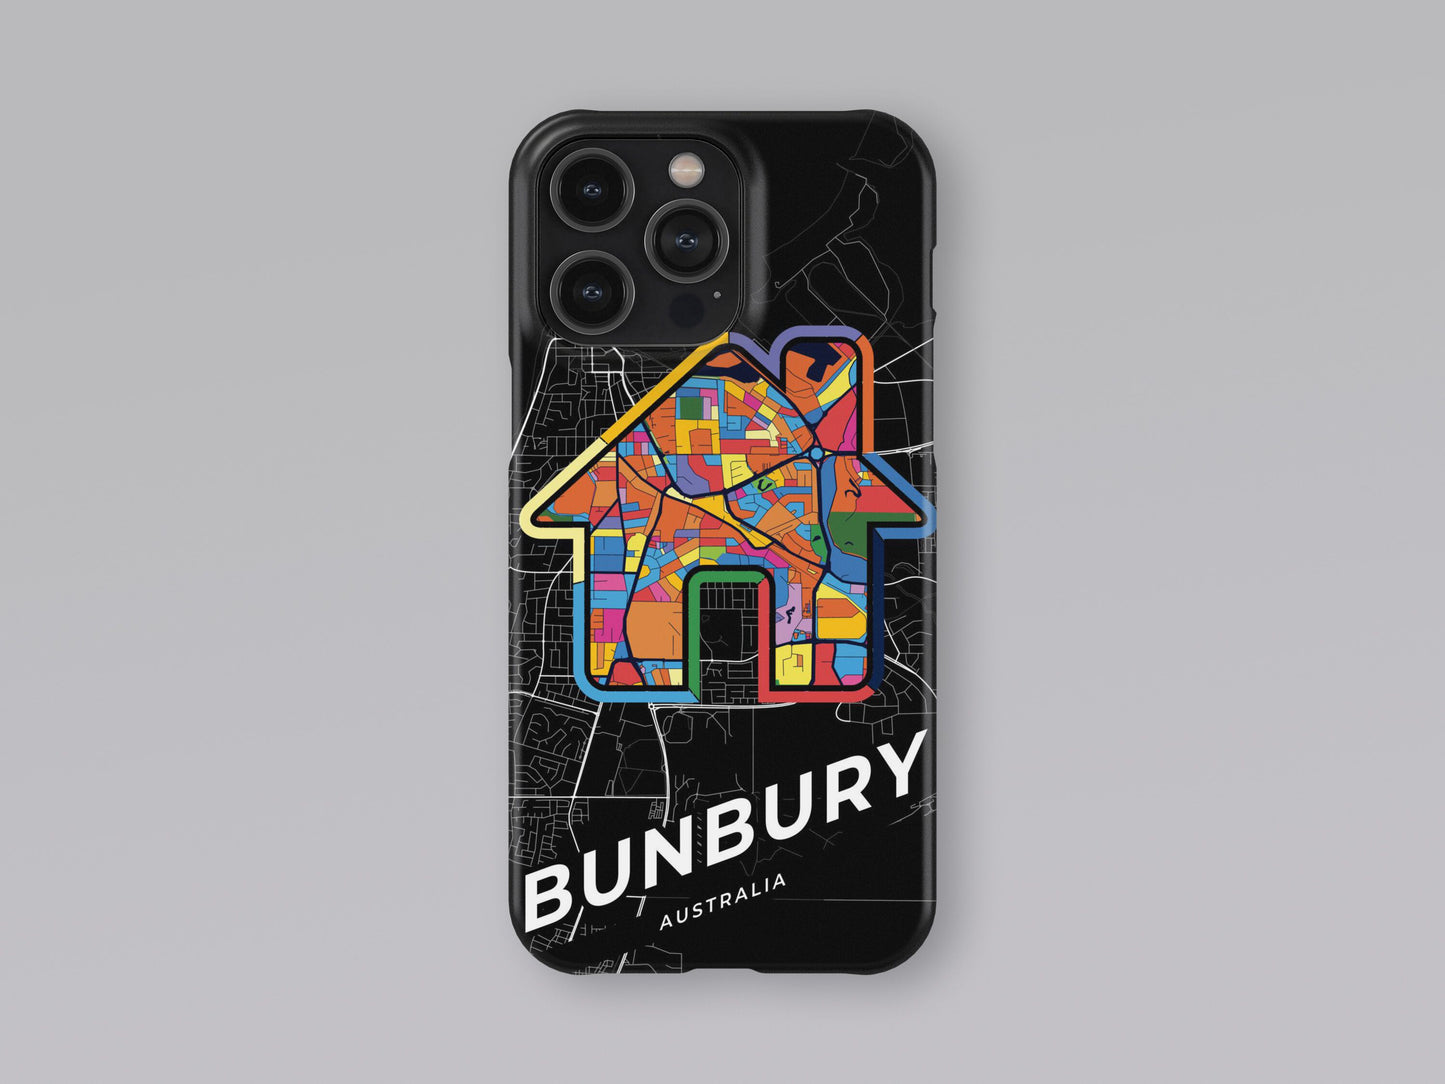 Bunbury Australia slim phone case with colorful icon. Birthday, wedding or housewarming gift. Couple match cases. 3